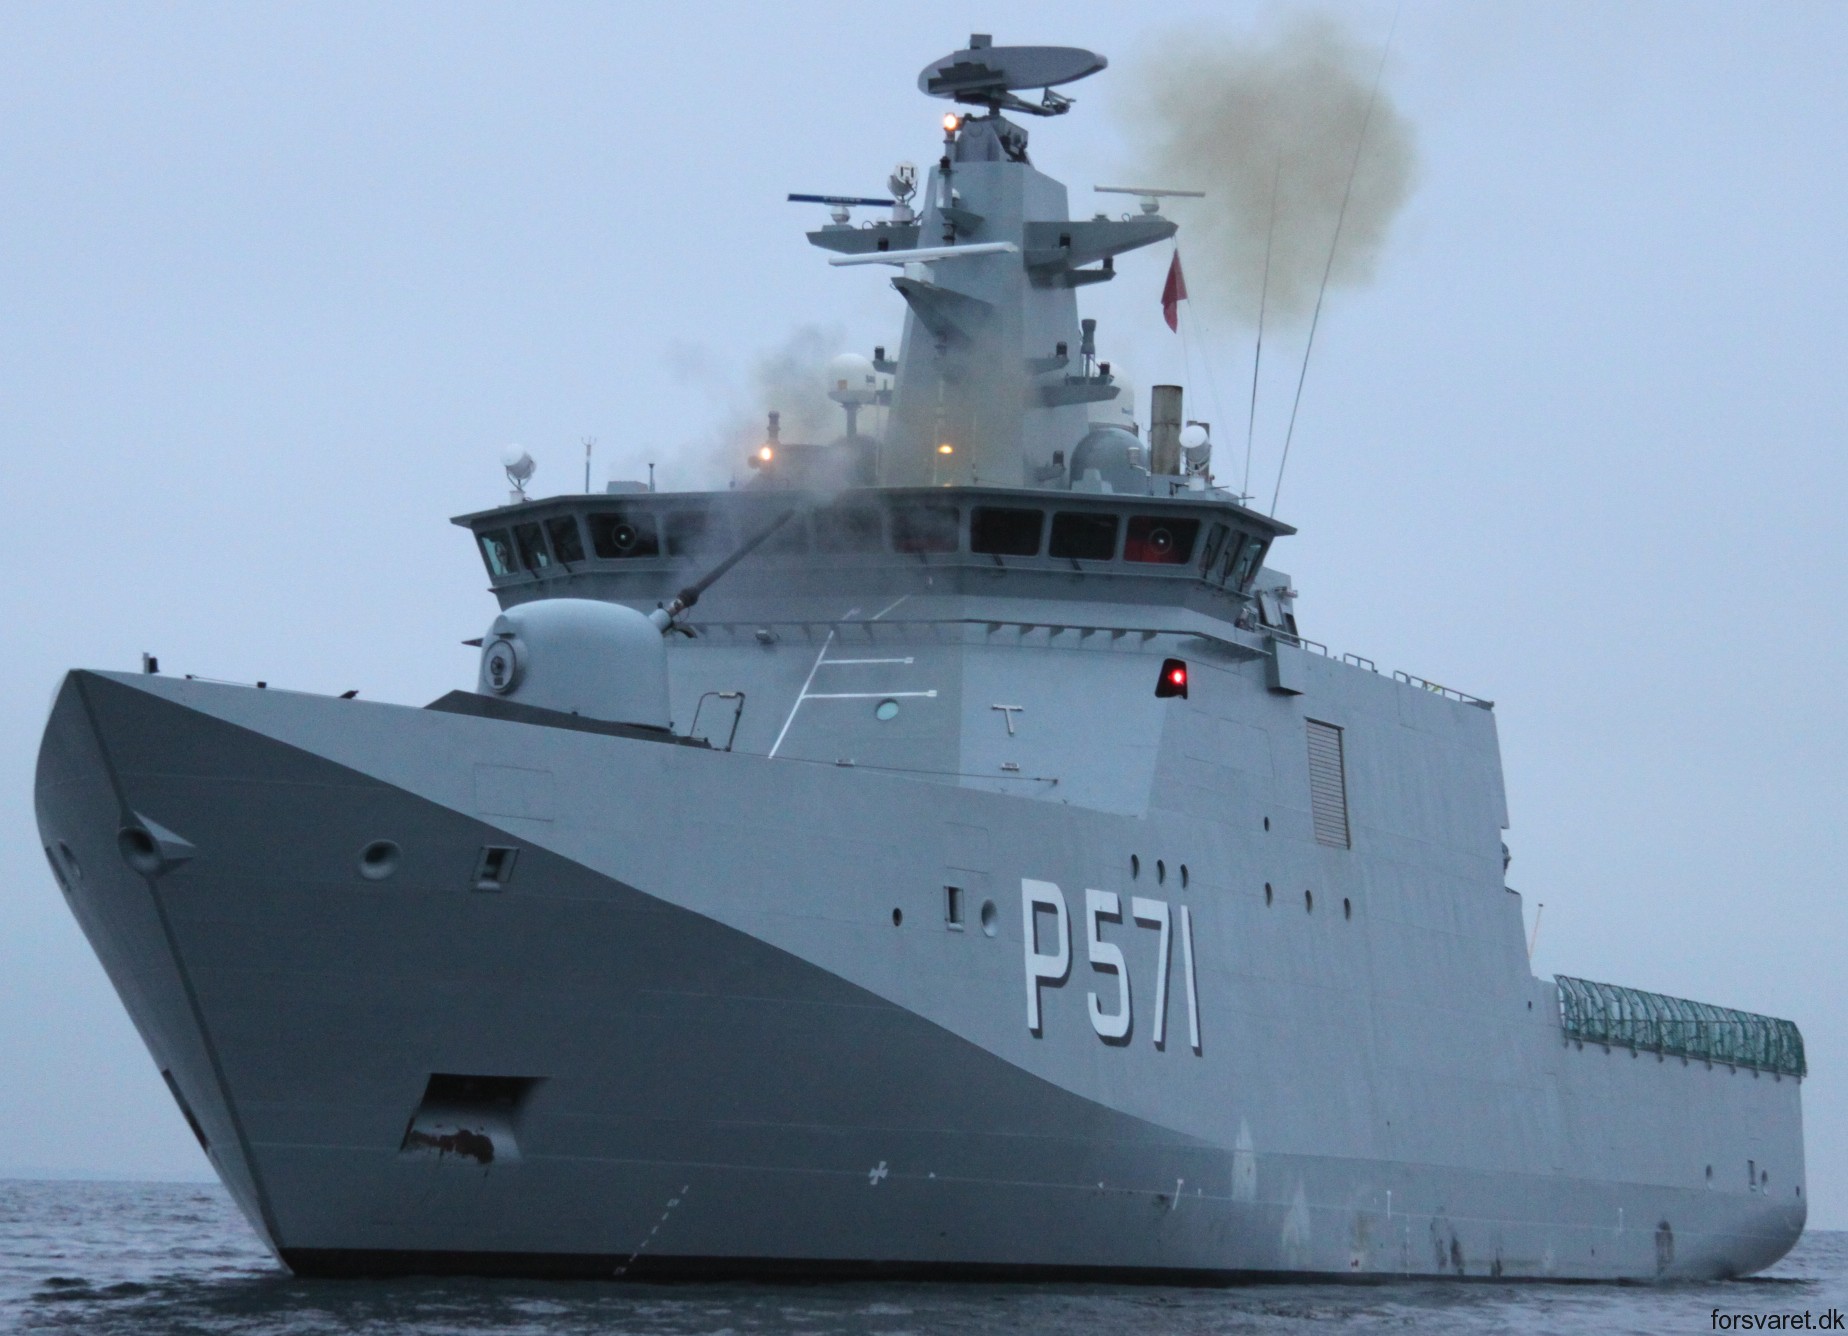 p-571 hdms ejnar mikkelsen knud rasmussen class offshore patrol vessel opv royal danish navy inspektionsfartøj 08 oto melara 76mm gun fire